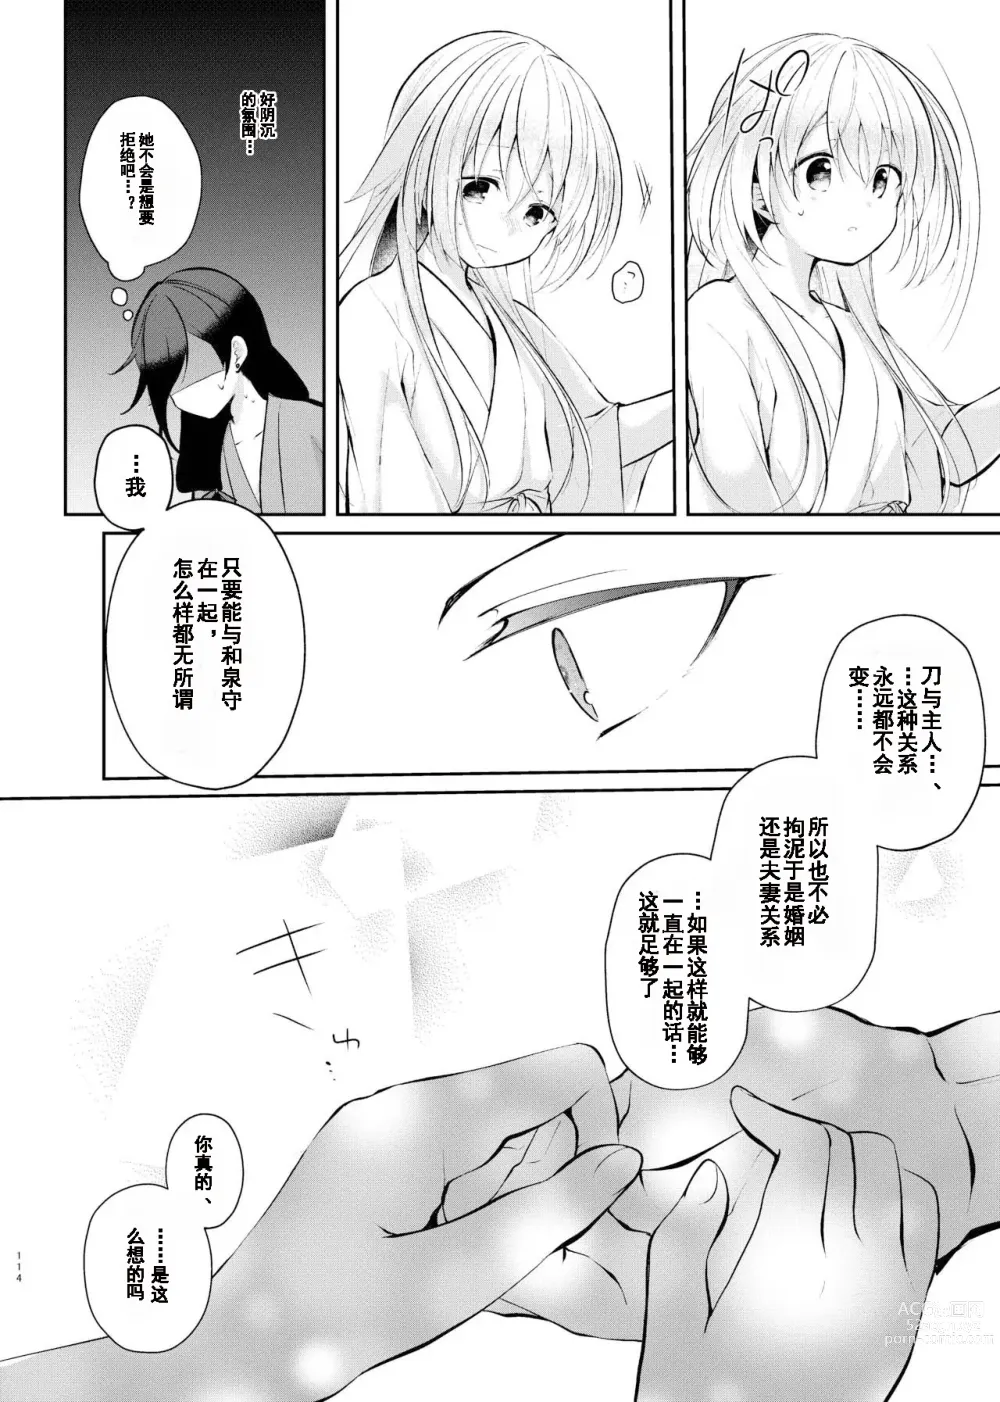 Page 34 of doujinshi 欣欣夏日